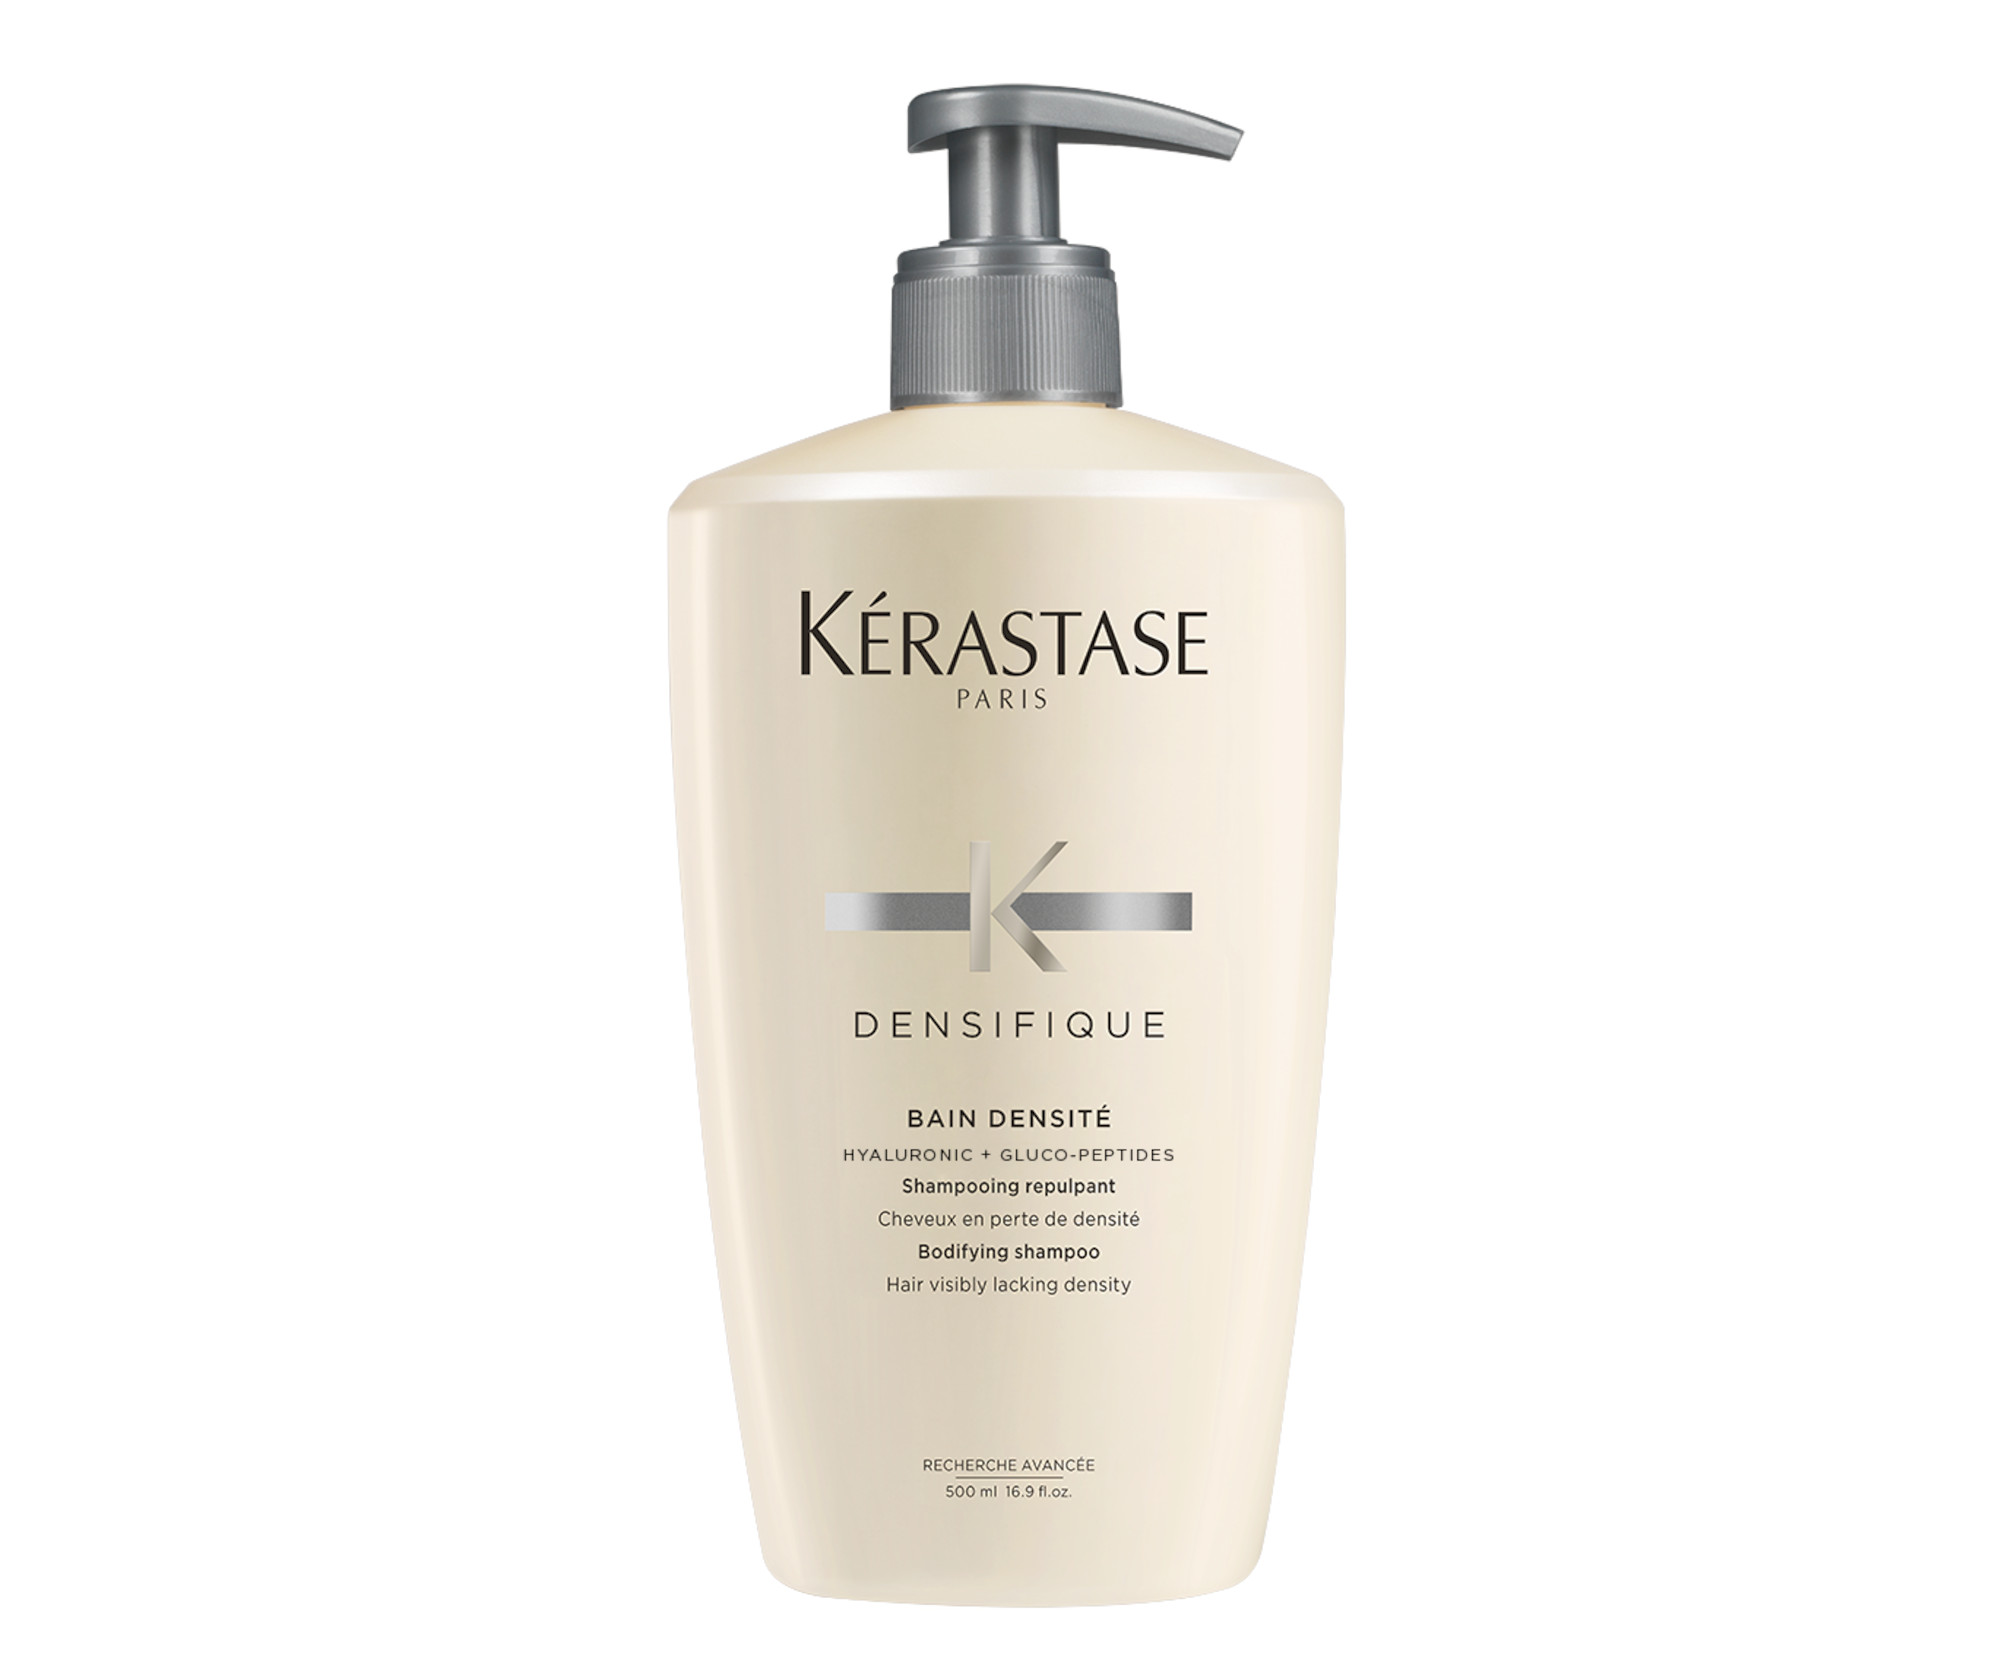 Šampon pro hustotu vlasů Kérastase Densifique Densité - 500 ml + DÁREK ZDARMA